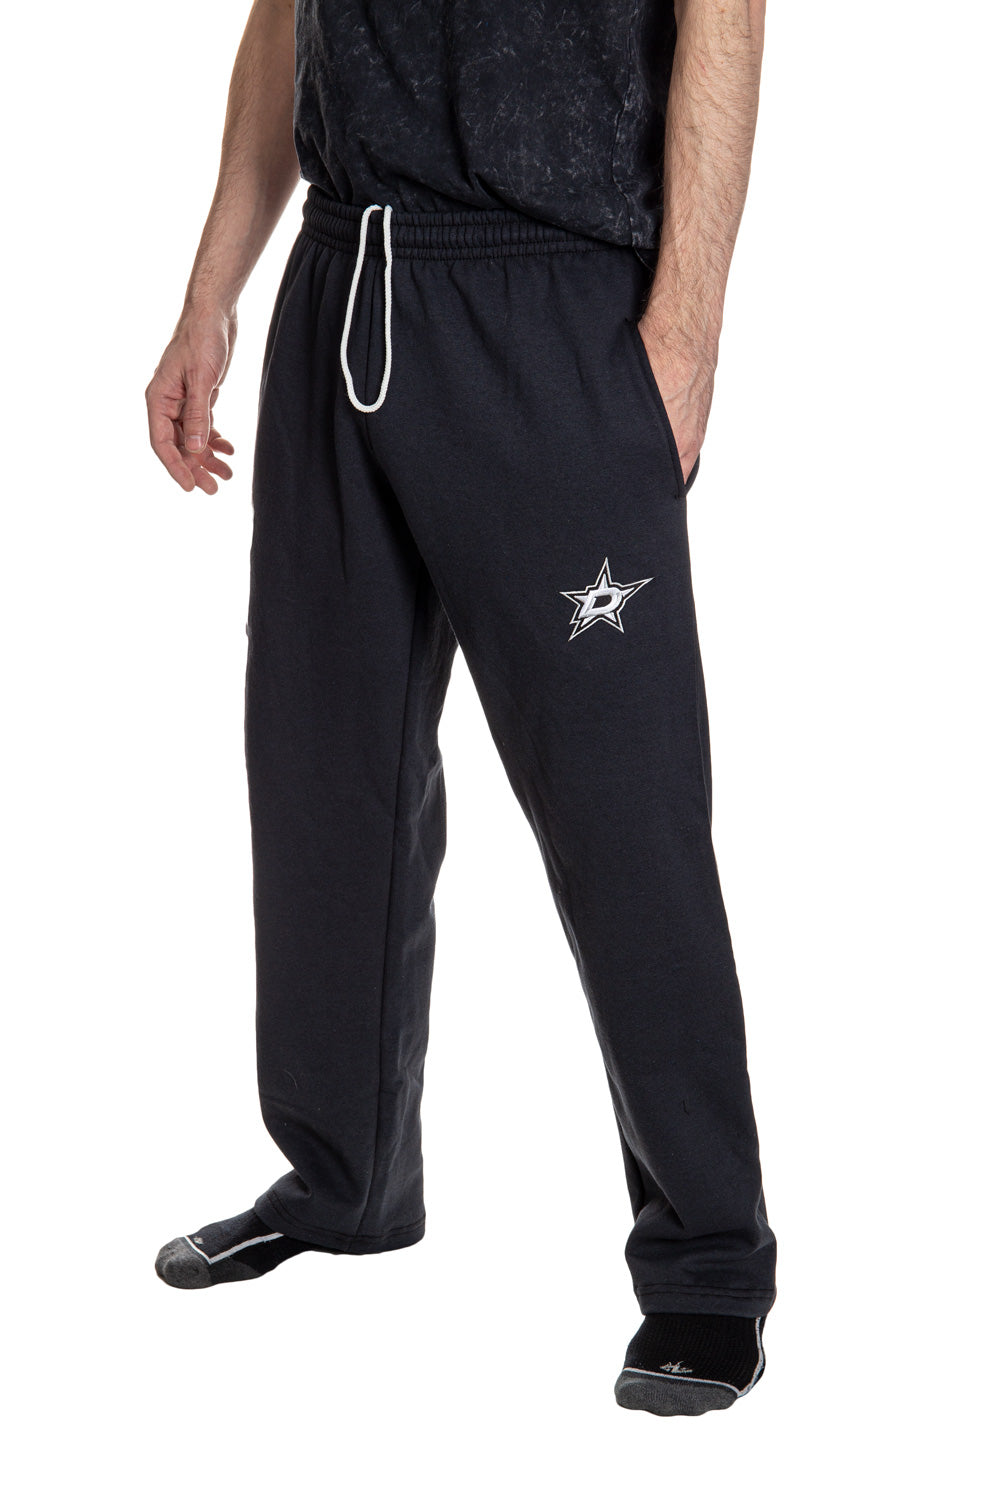 Dallas Stars Premium Fleece Sweatpants Side View of Embroidered Logo.